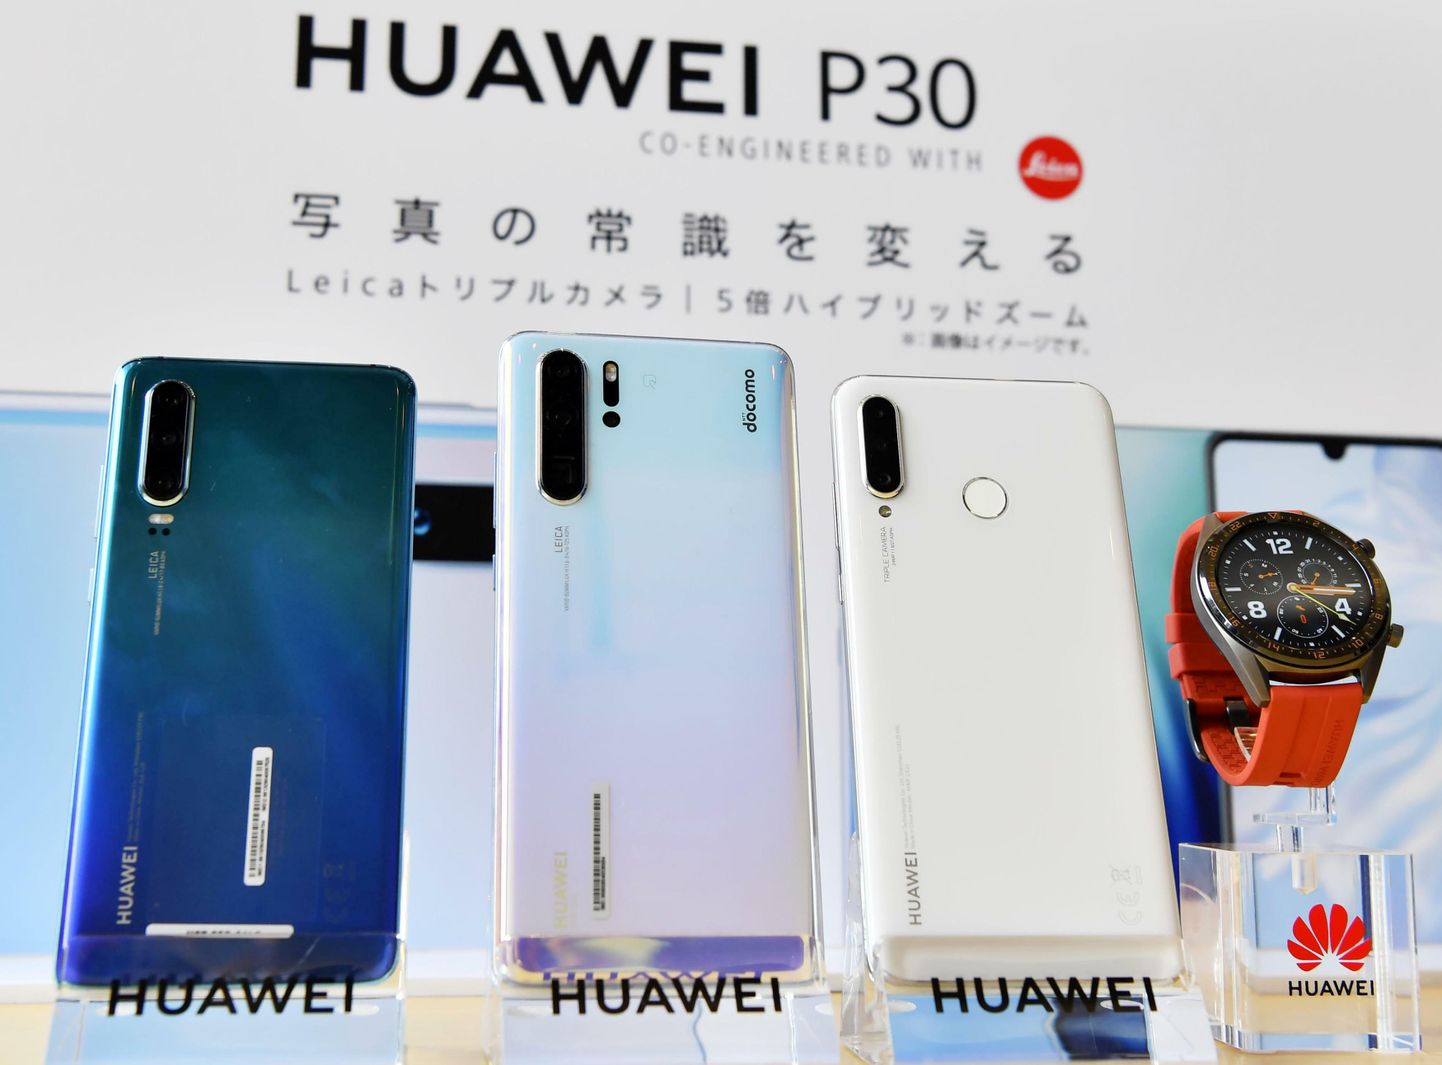 Huawei P30 telefonid väljapanekul Tokyos.